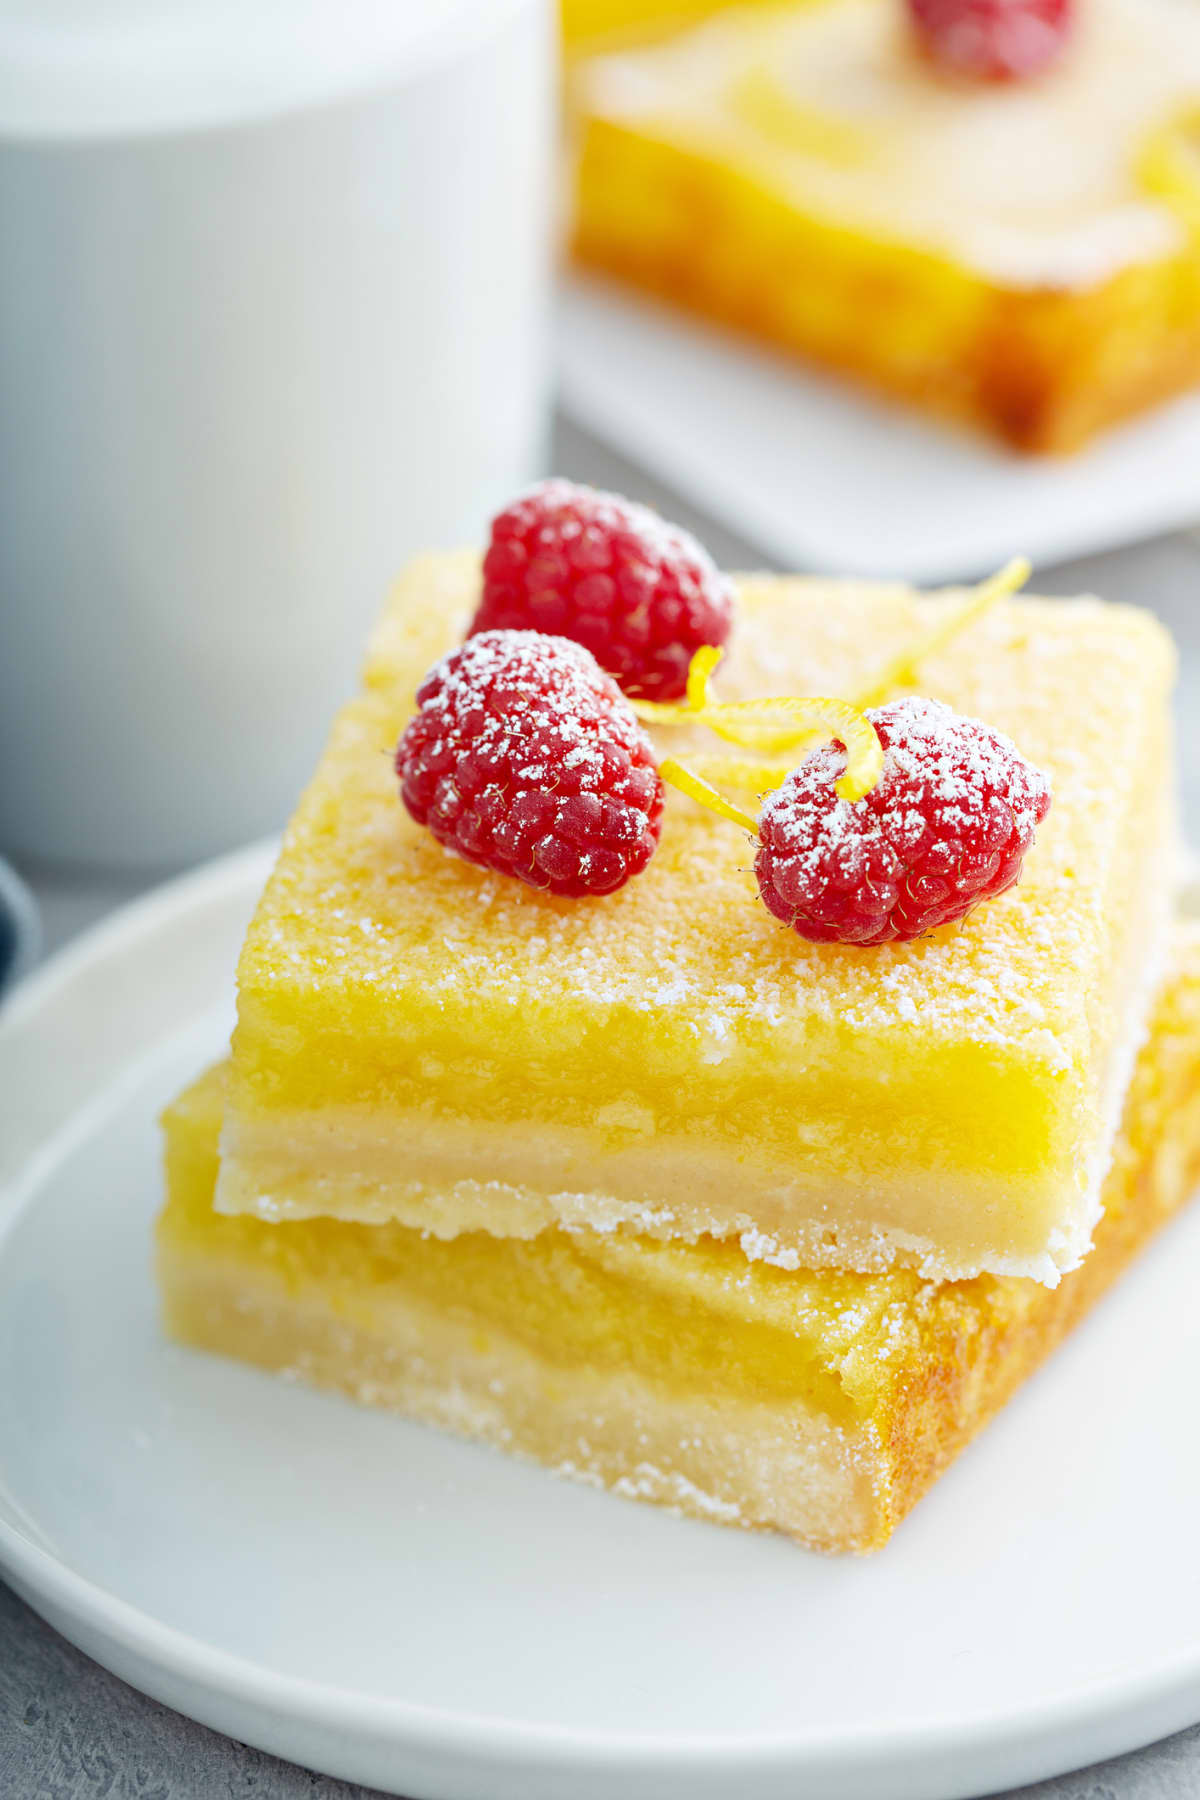 Lemon bar dessert with berries on top